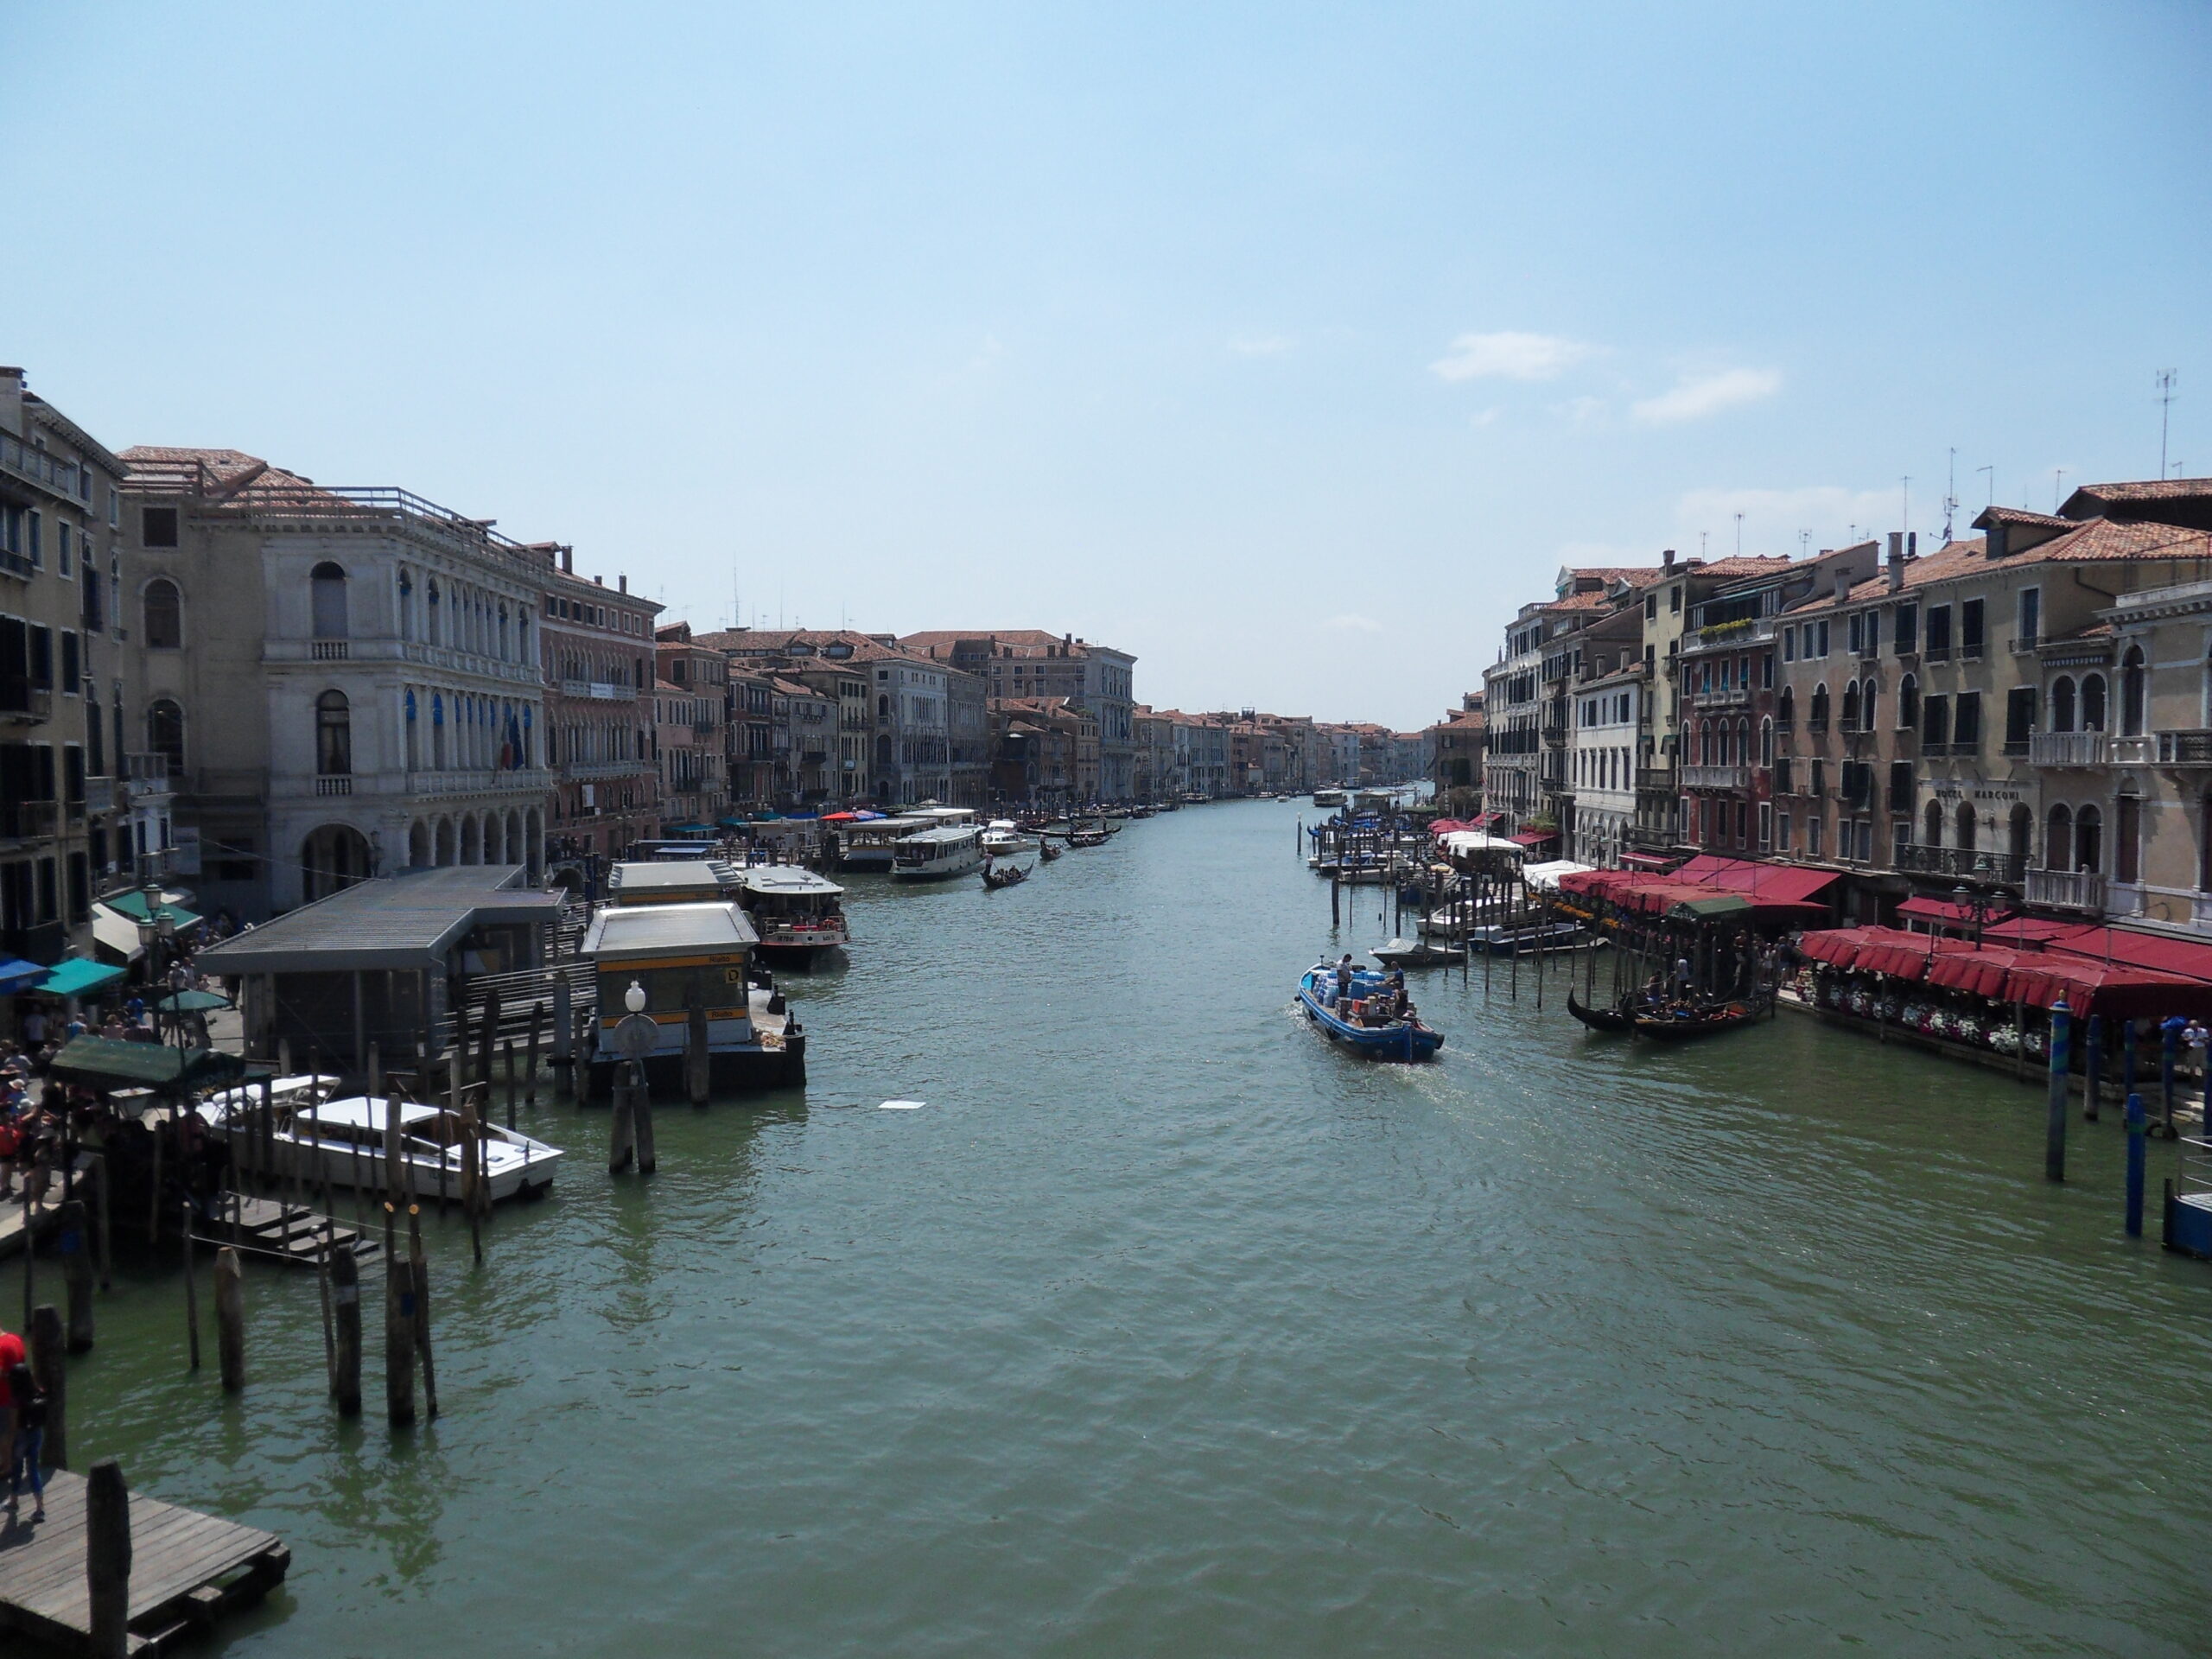 Bild: Blick auf Kanal in Venedig, Italien